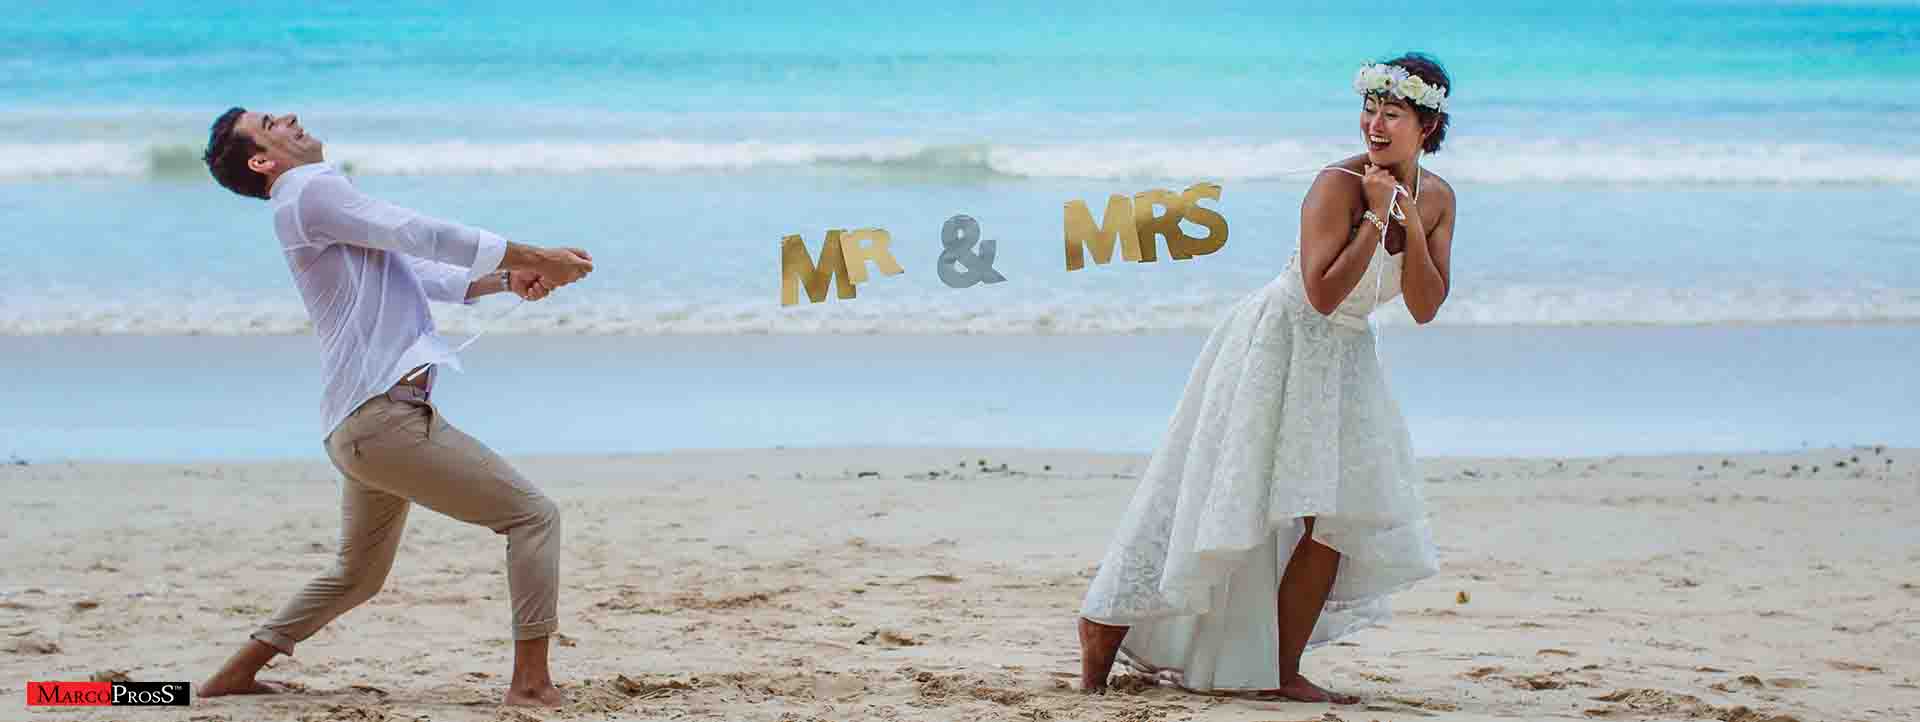 wedding in seyschelles - mr & mrs - couple on a sand beach